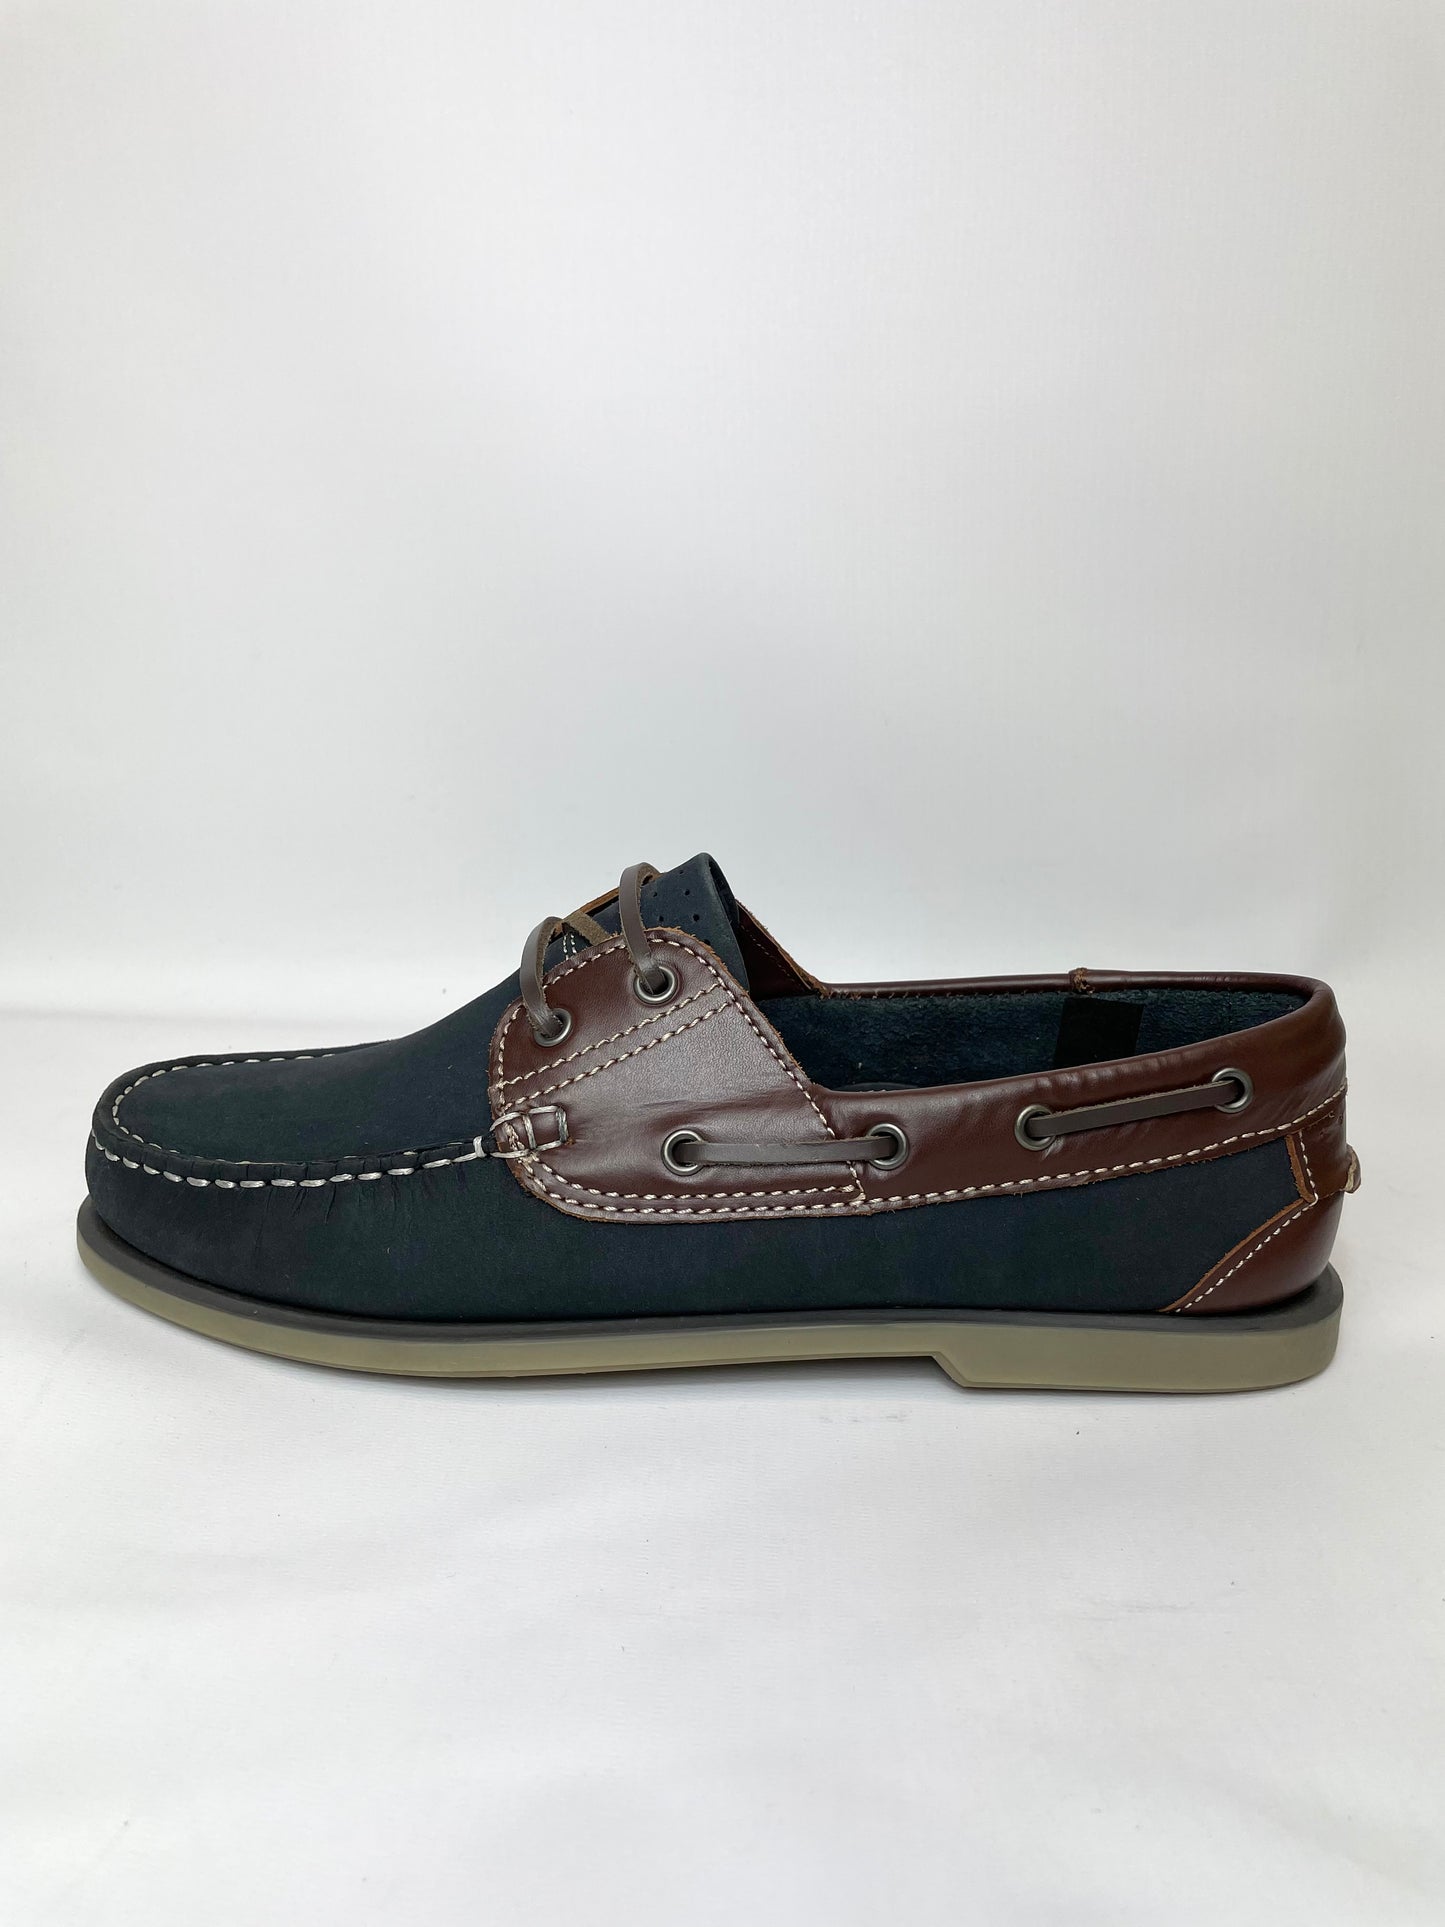 Dek Leather Moccasin Mens Boat Shoes Navy Brown